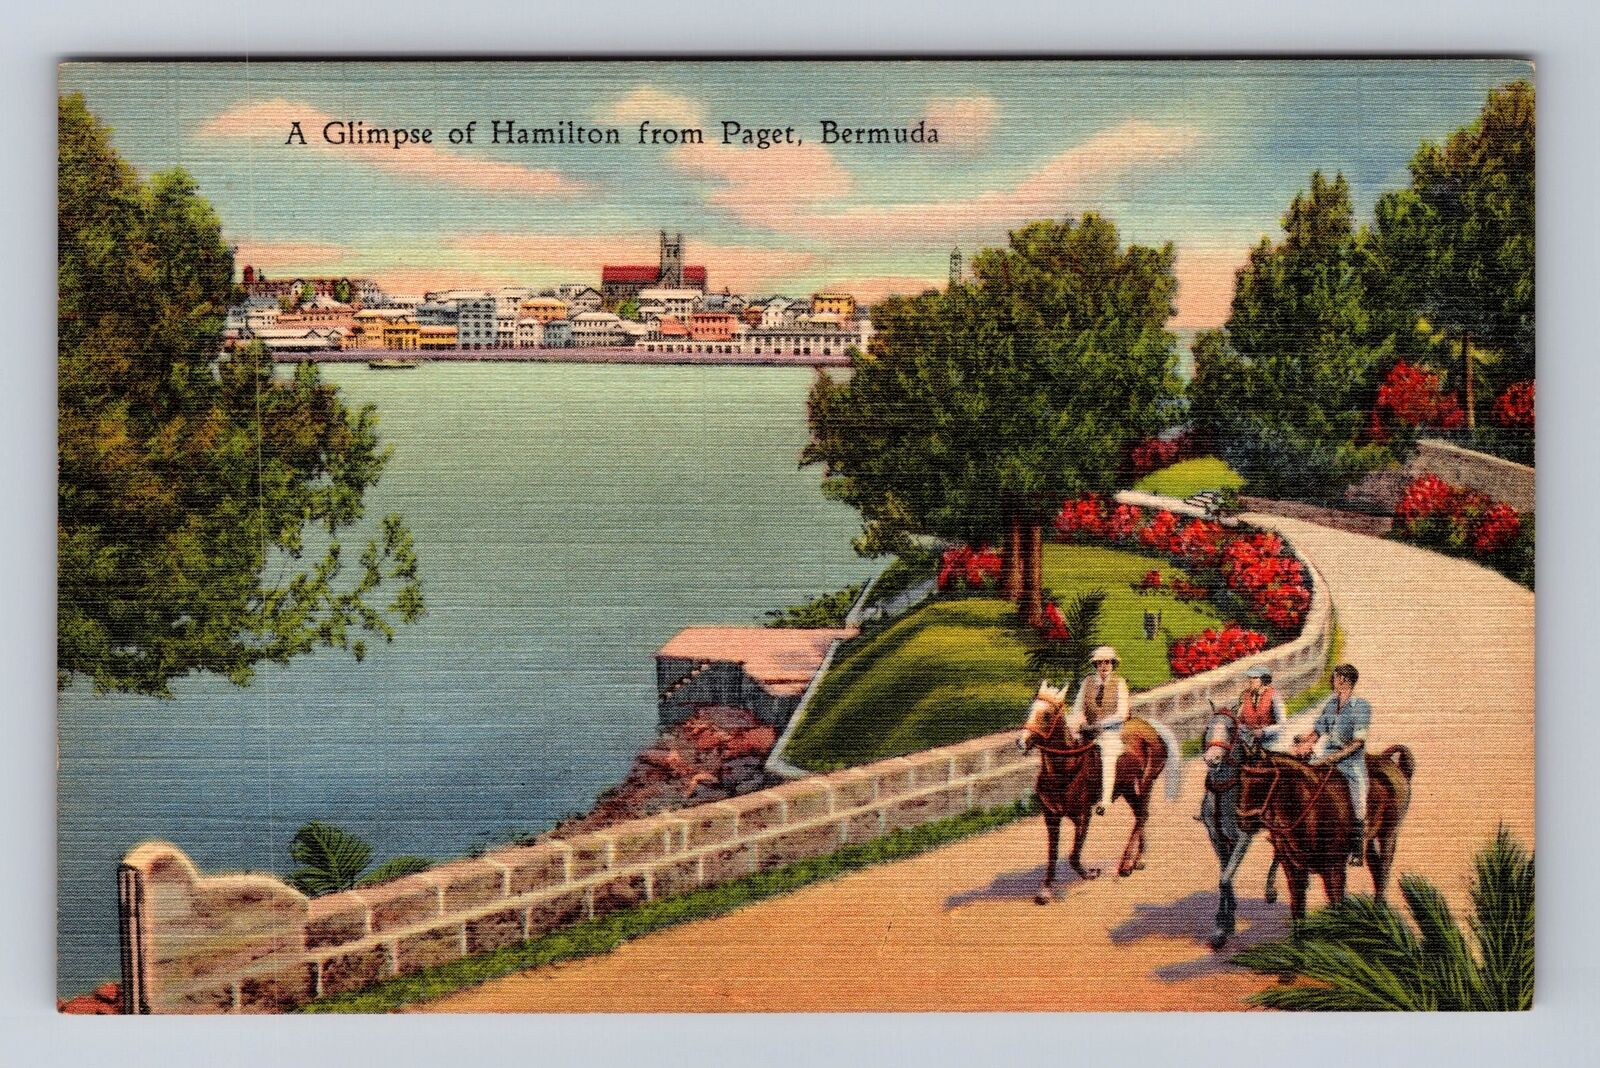 Paget-Bermuda, Scenic Panoramic Views of Hamilton, Antique Vintage Postcard